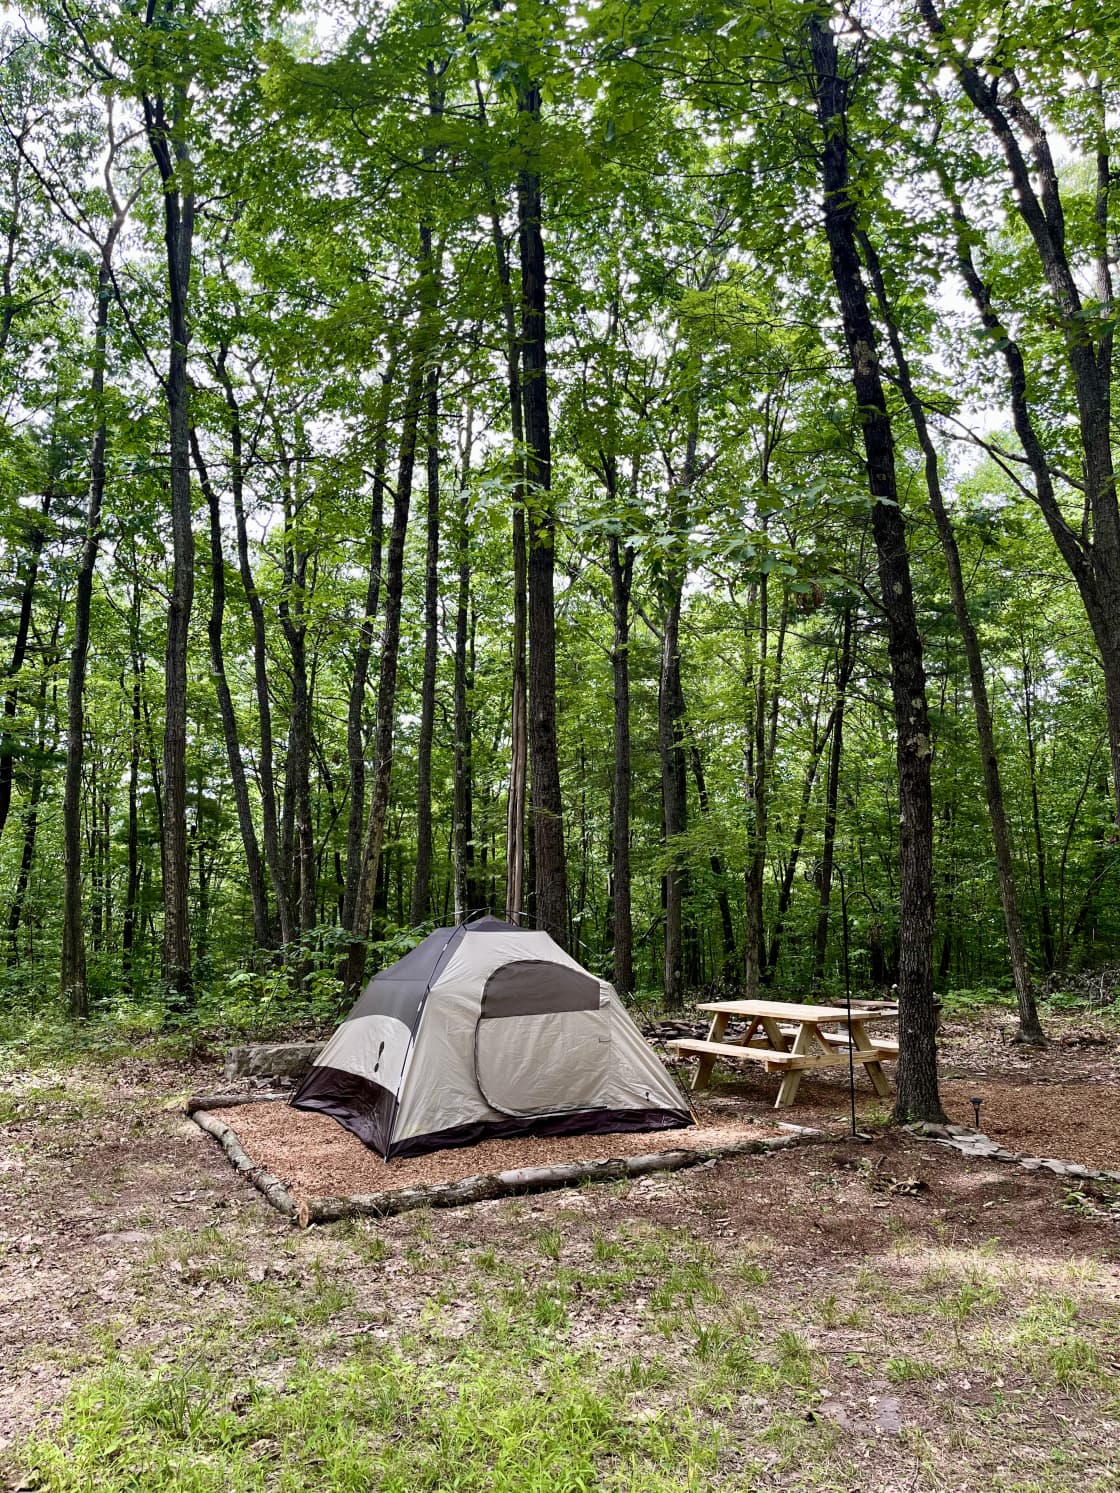 Your campsite